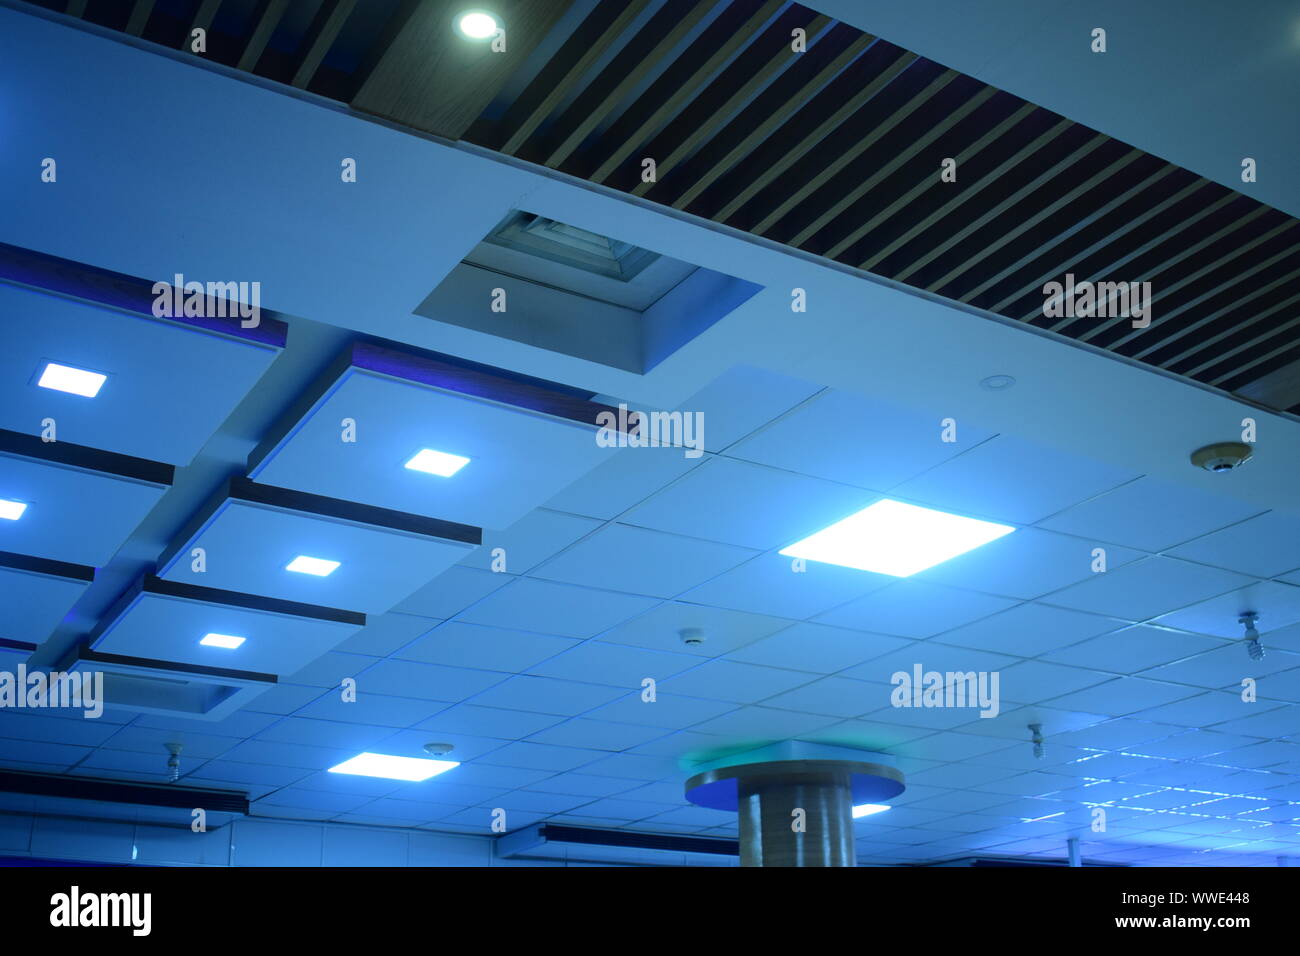 Techo de iluminación led fotografías e imágenes de alta resolución - Alamy